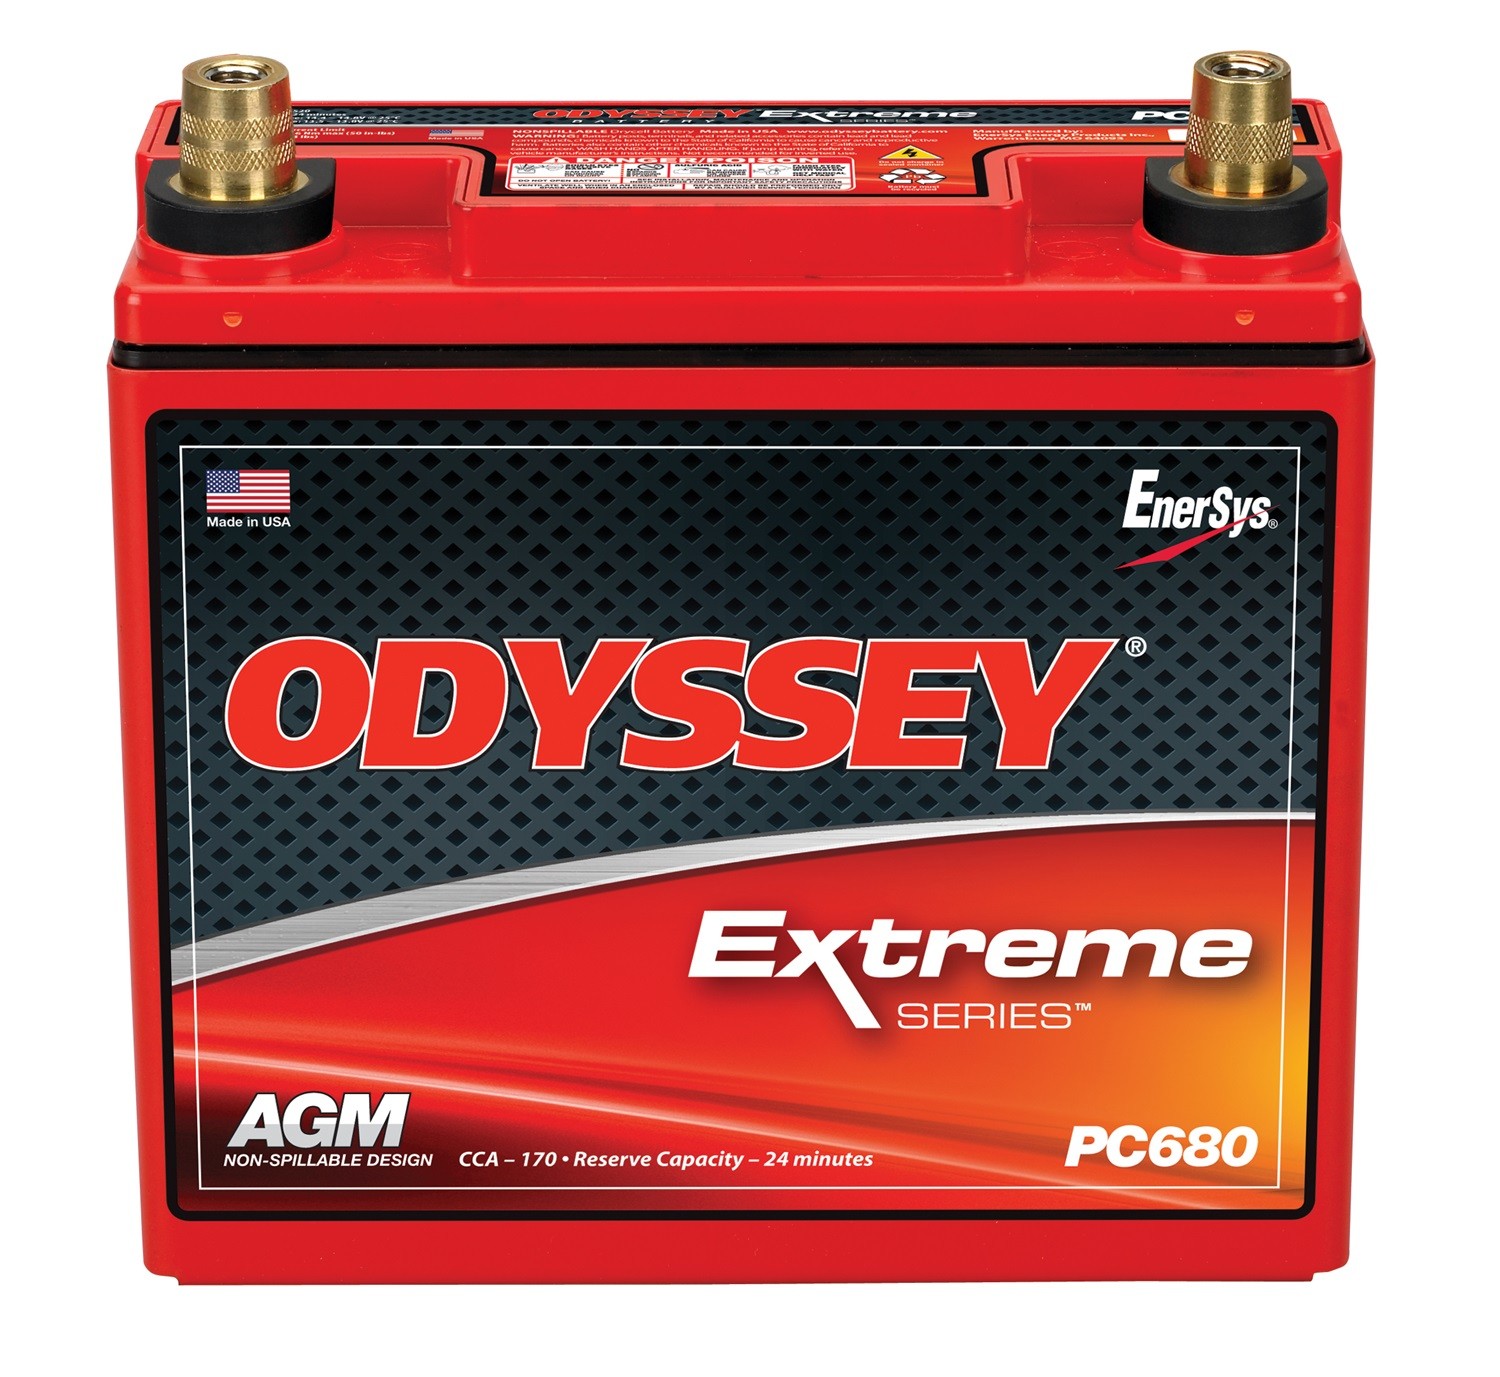 Odyssey Battery Pc680mjt Extreme Powersport Battery - image 2 of 3